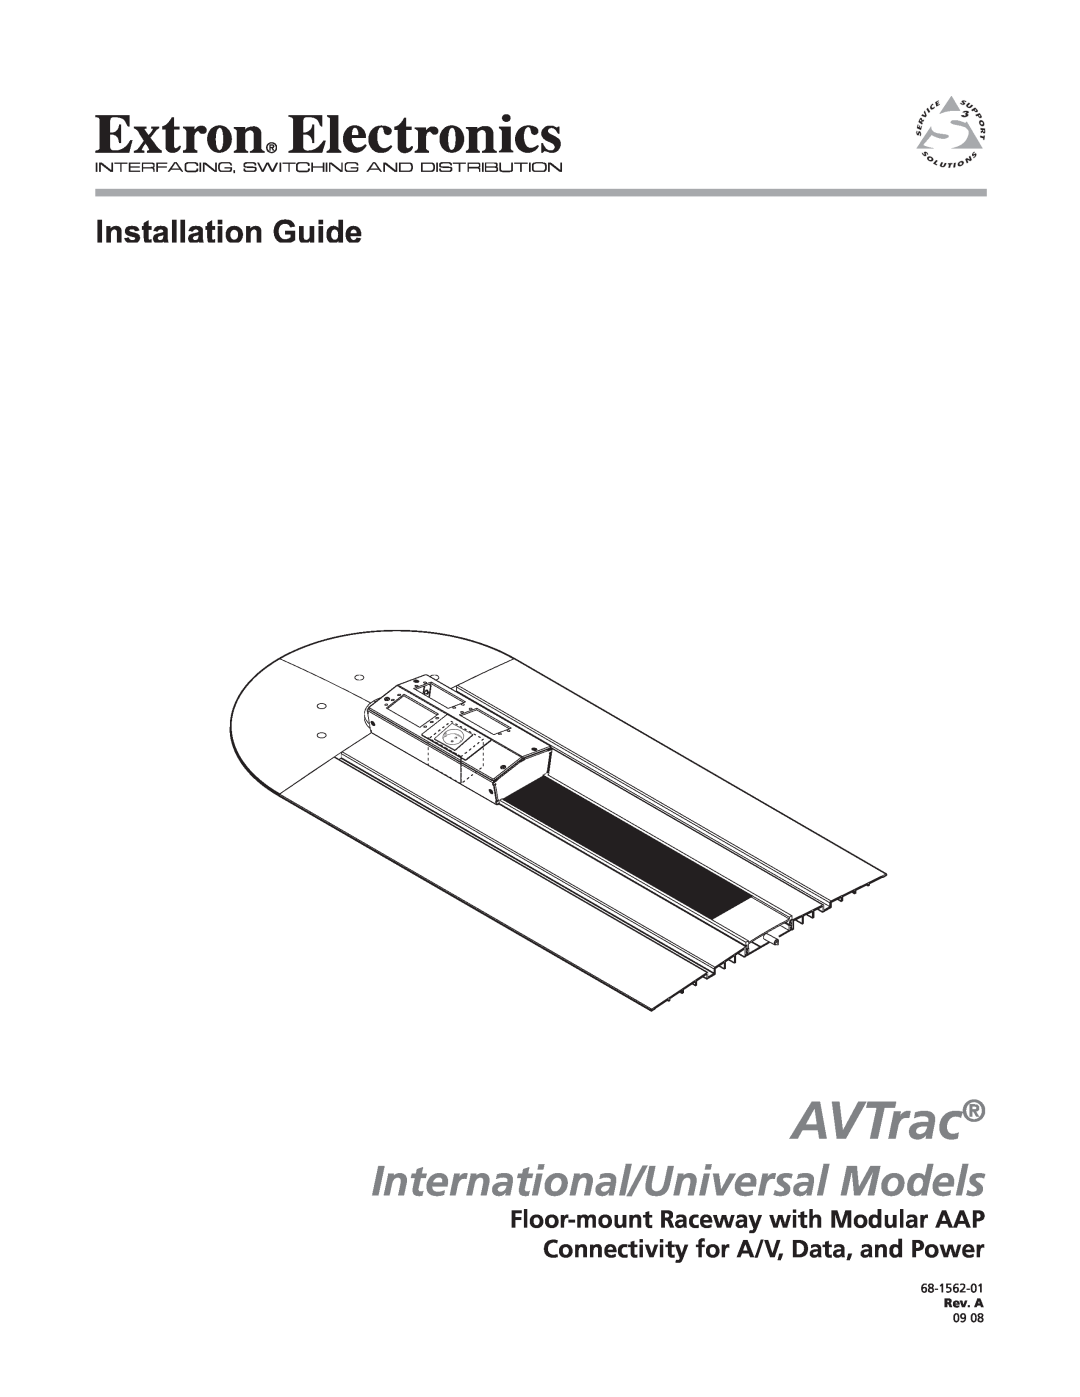 Extron electronic 42-122-xx manual Installation Guide, AVTrac, International/Universal Models, 68-1562-01, Rev. A 